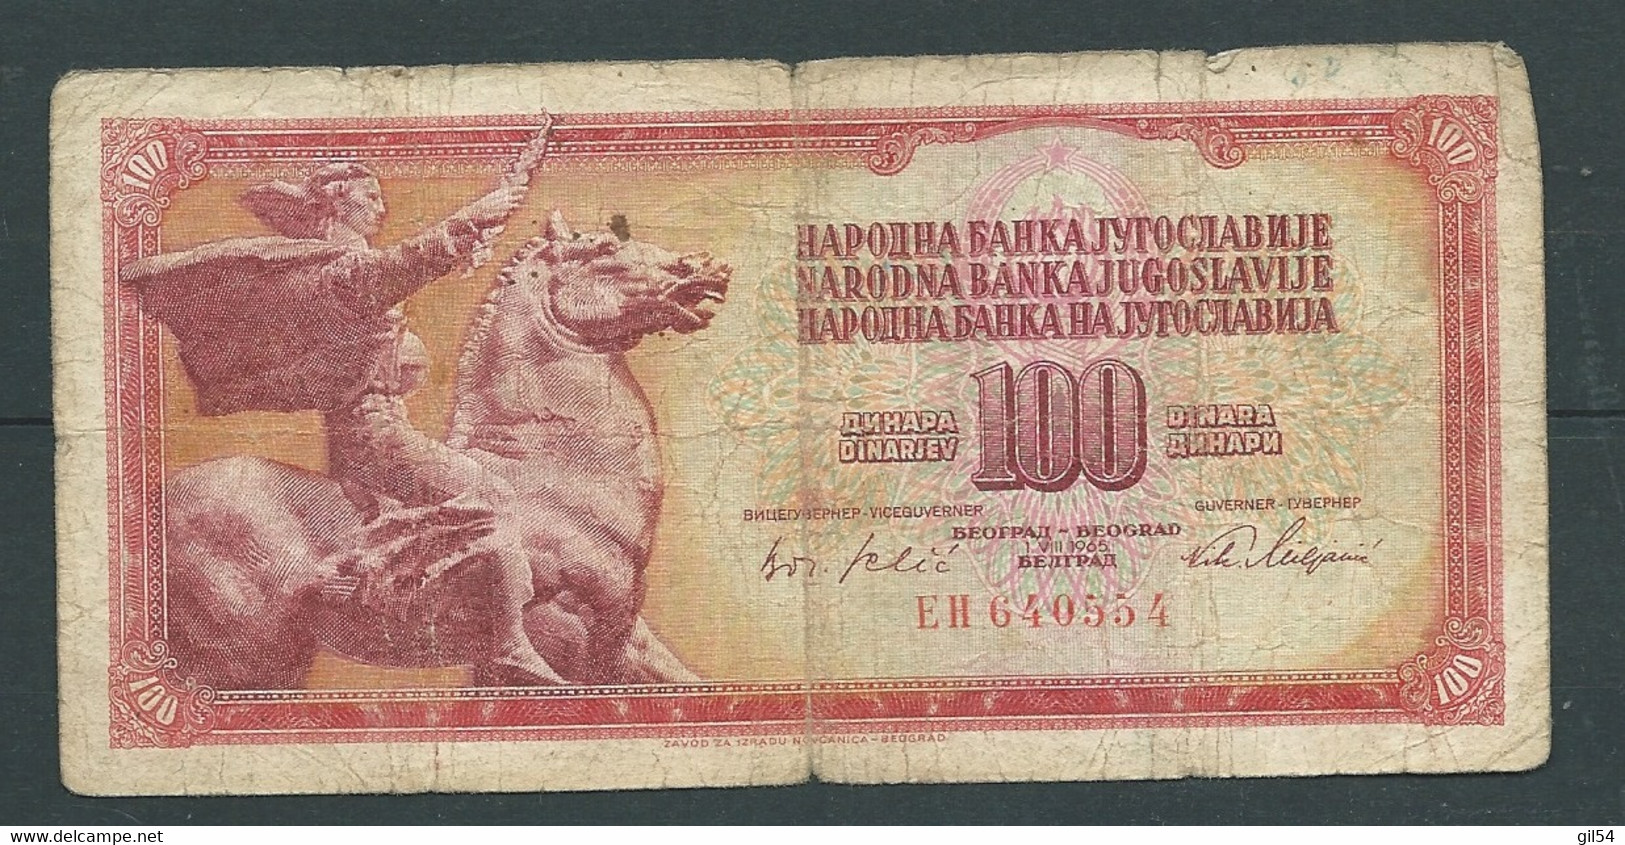 Billet Yougoslavie 100 Dinars Année 1965 EH640554 - ETAT D'USAGE   LAURA 9608 - Yougoslavie